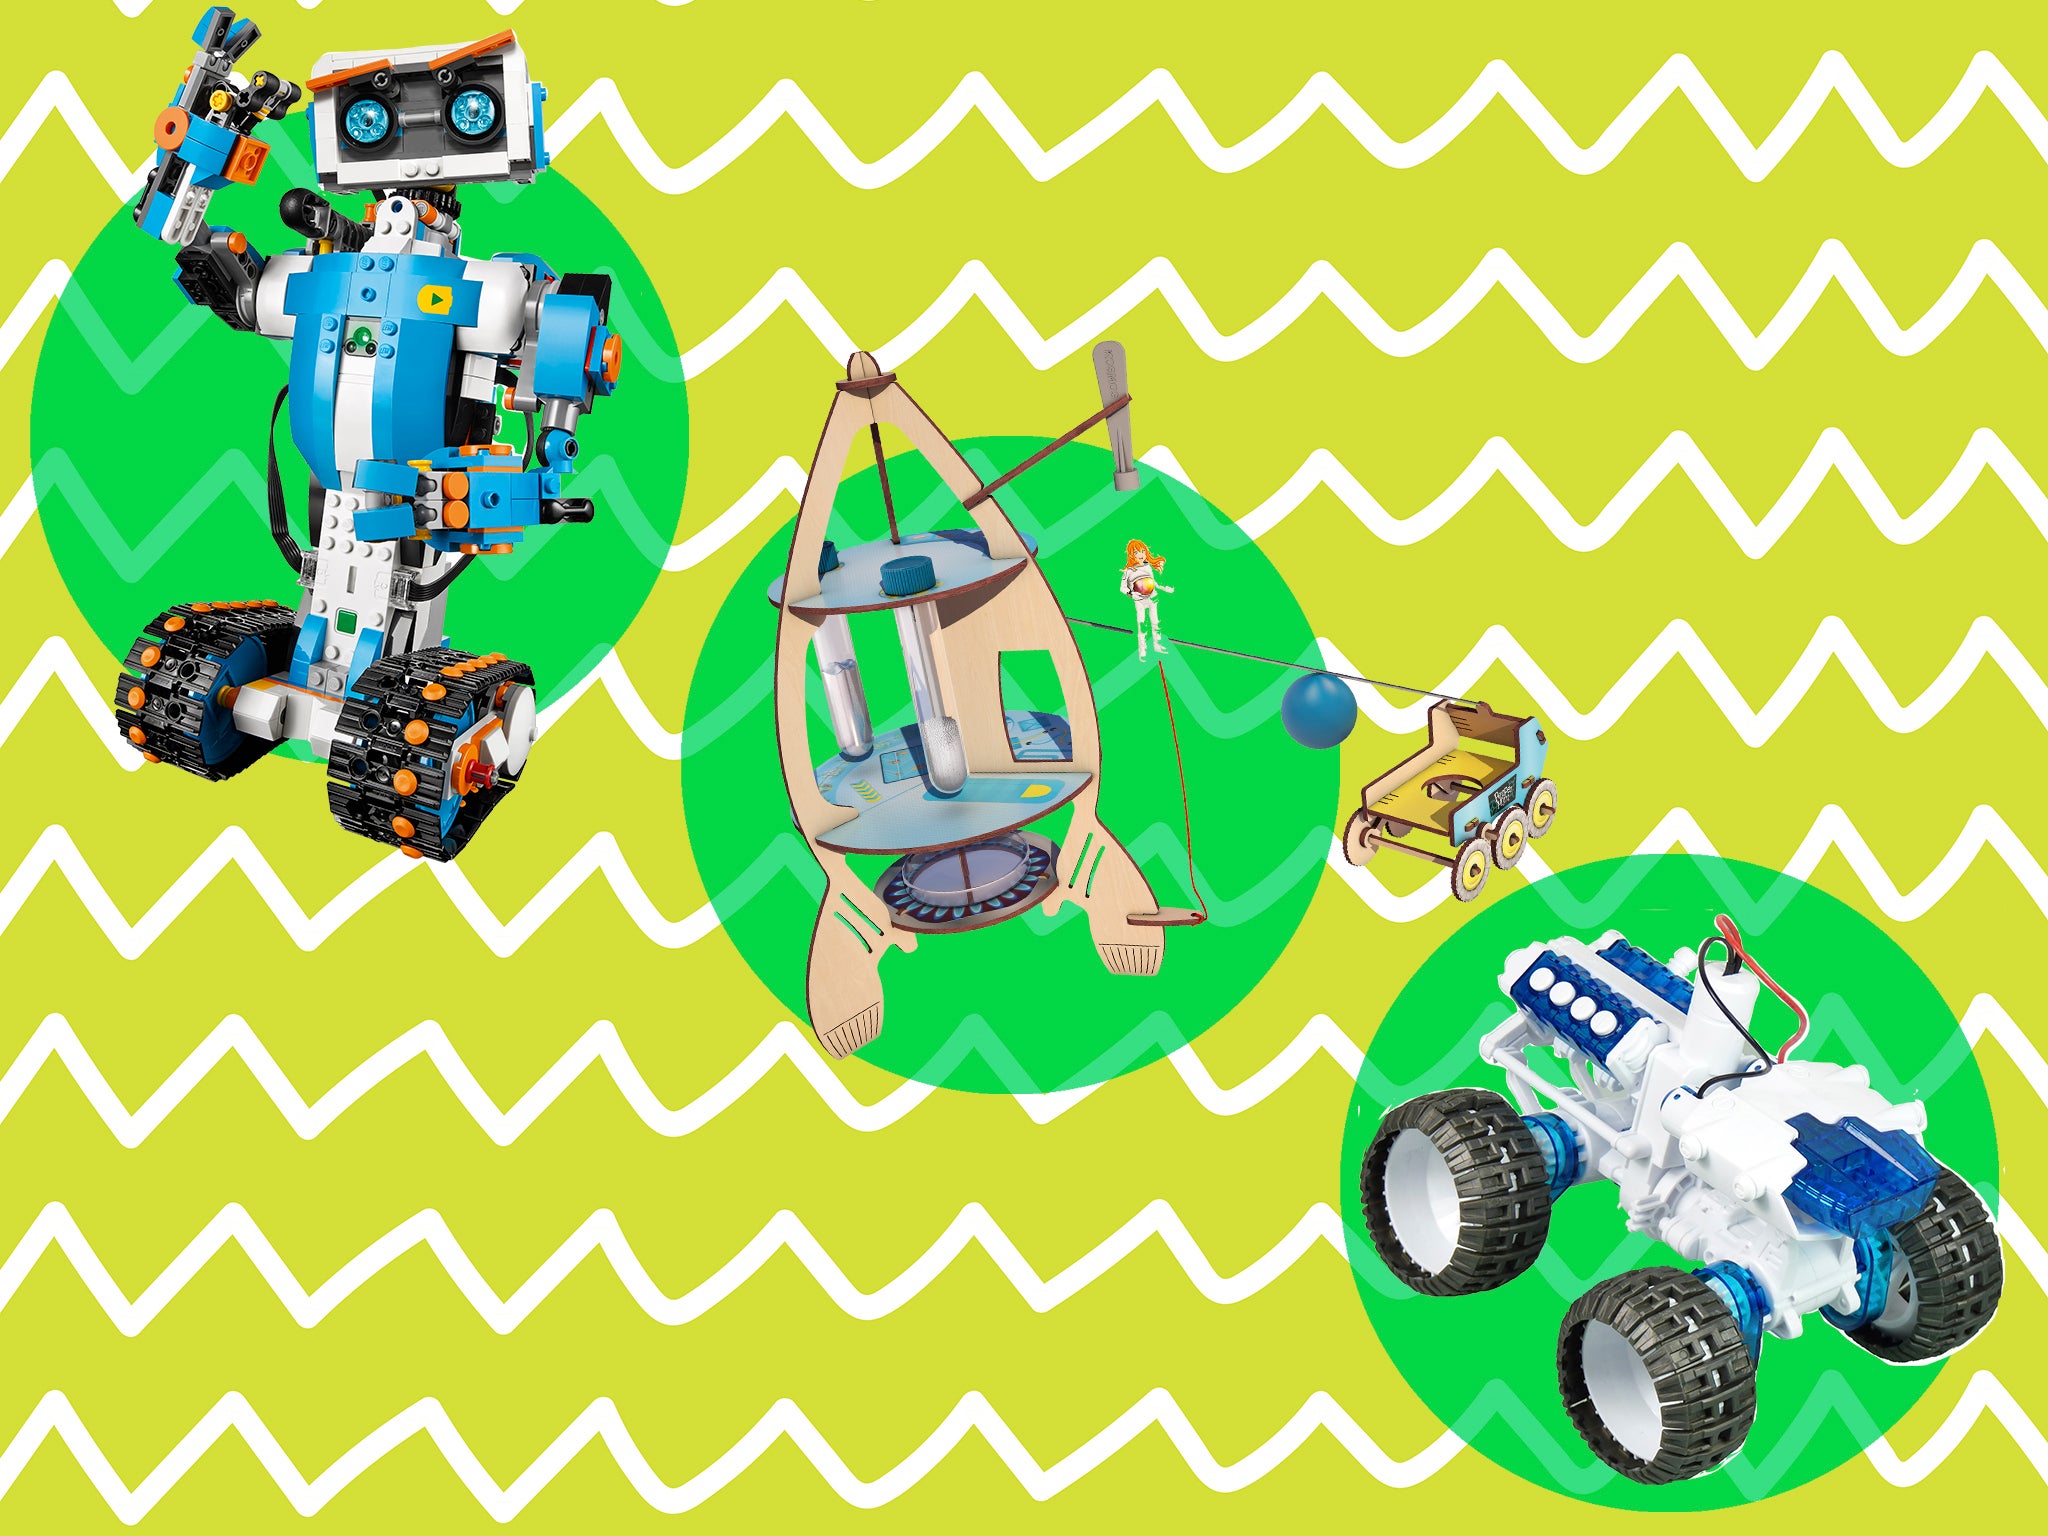 Build Your Own Wind Powered Car Older Boys Educational Kit Toys